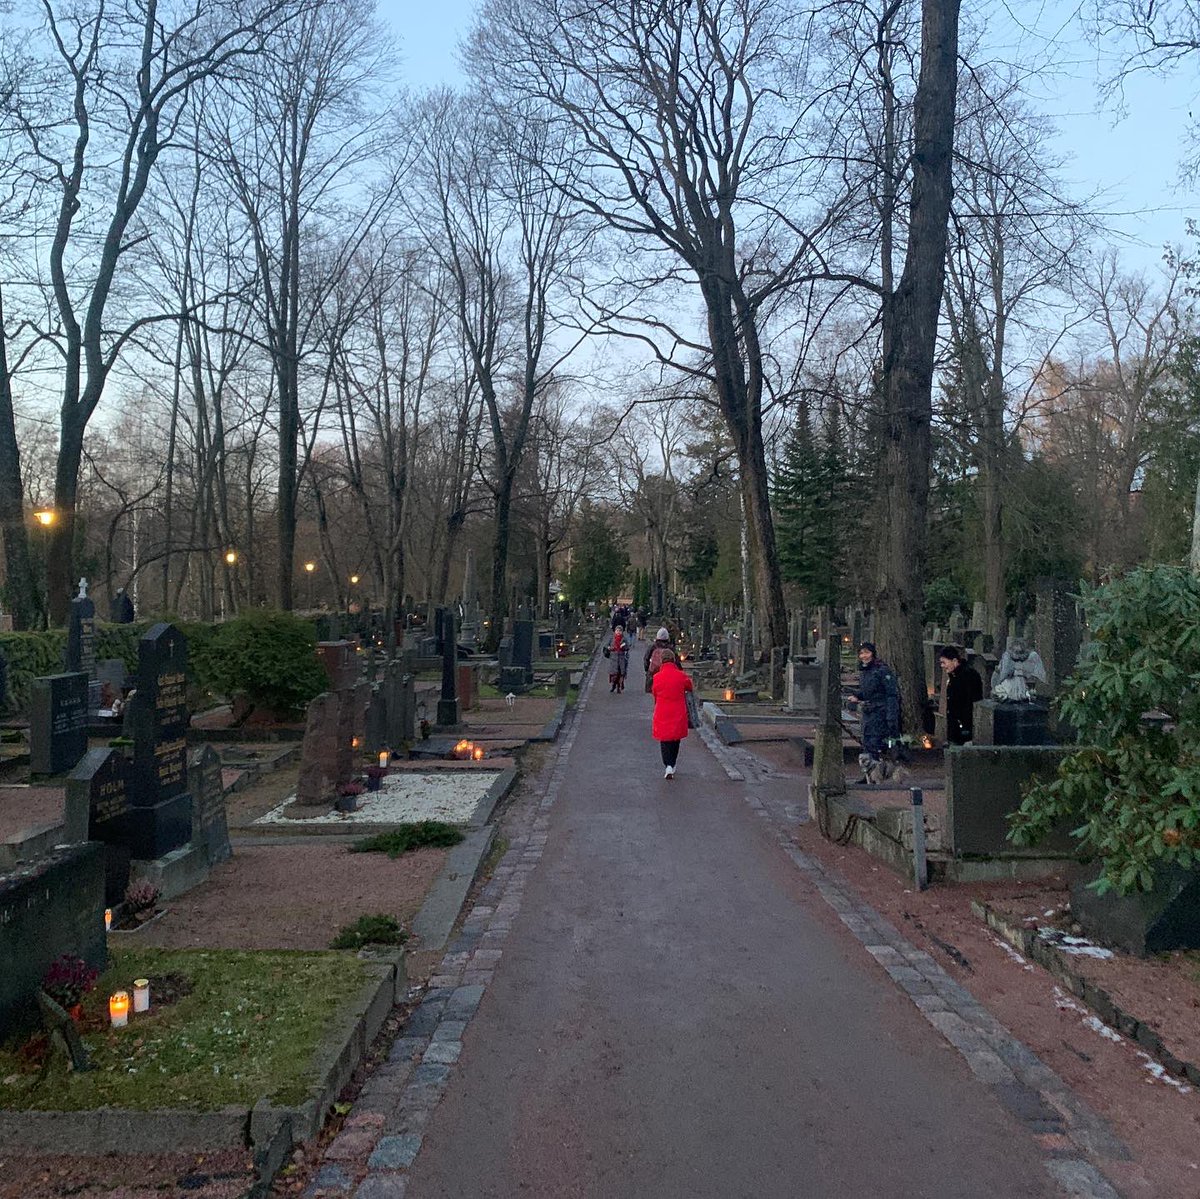 Everyone walking in the cemetery to commemorate #allsaintsday last weekend. #spooky and beautiful #Helsinki https://t.co/m0lOmv0sRk